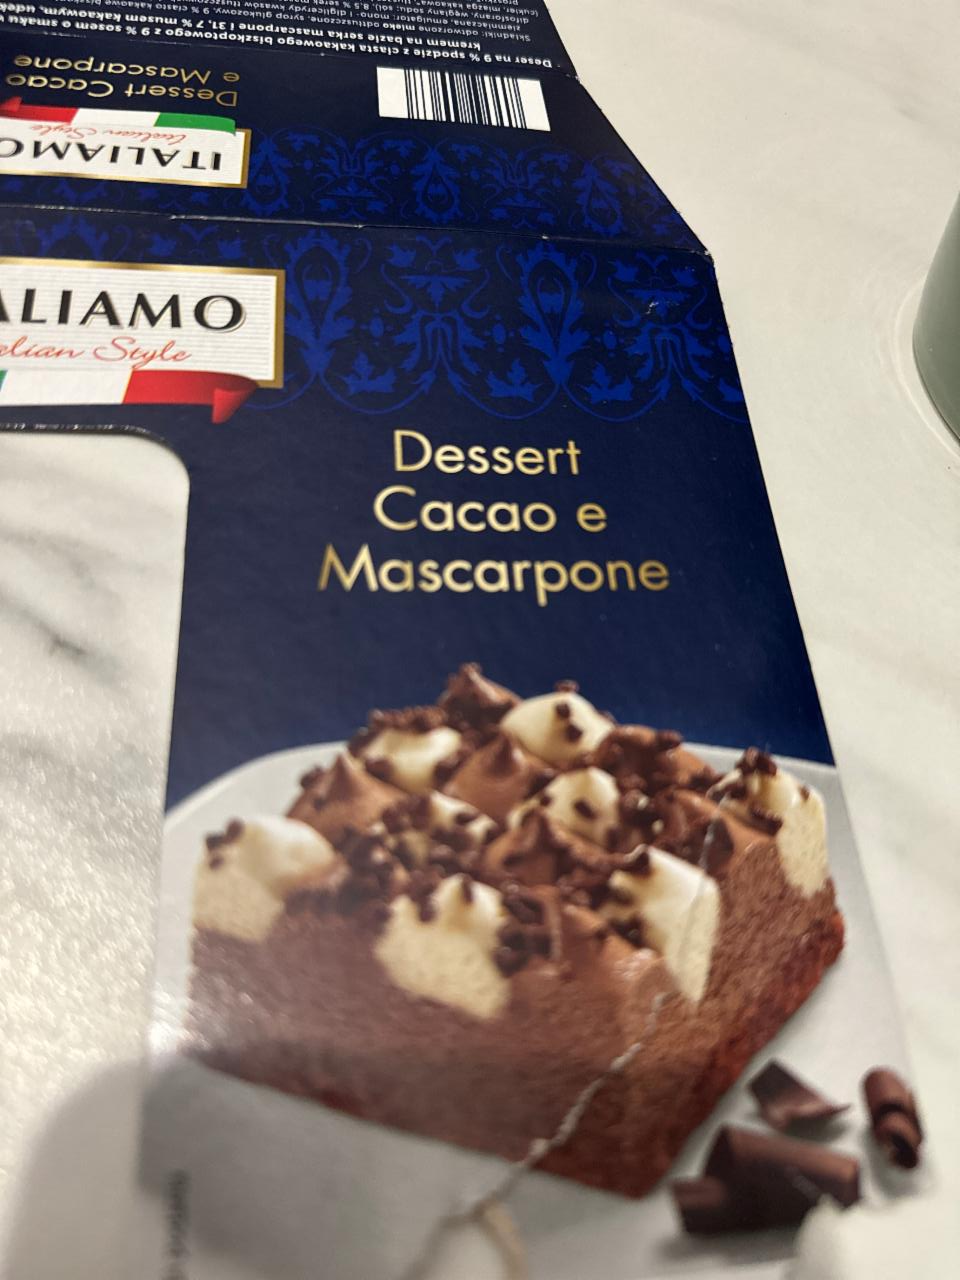 Фото - Desert cacao e mascarpone Italiamo